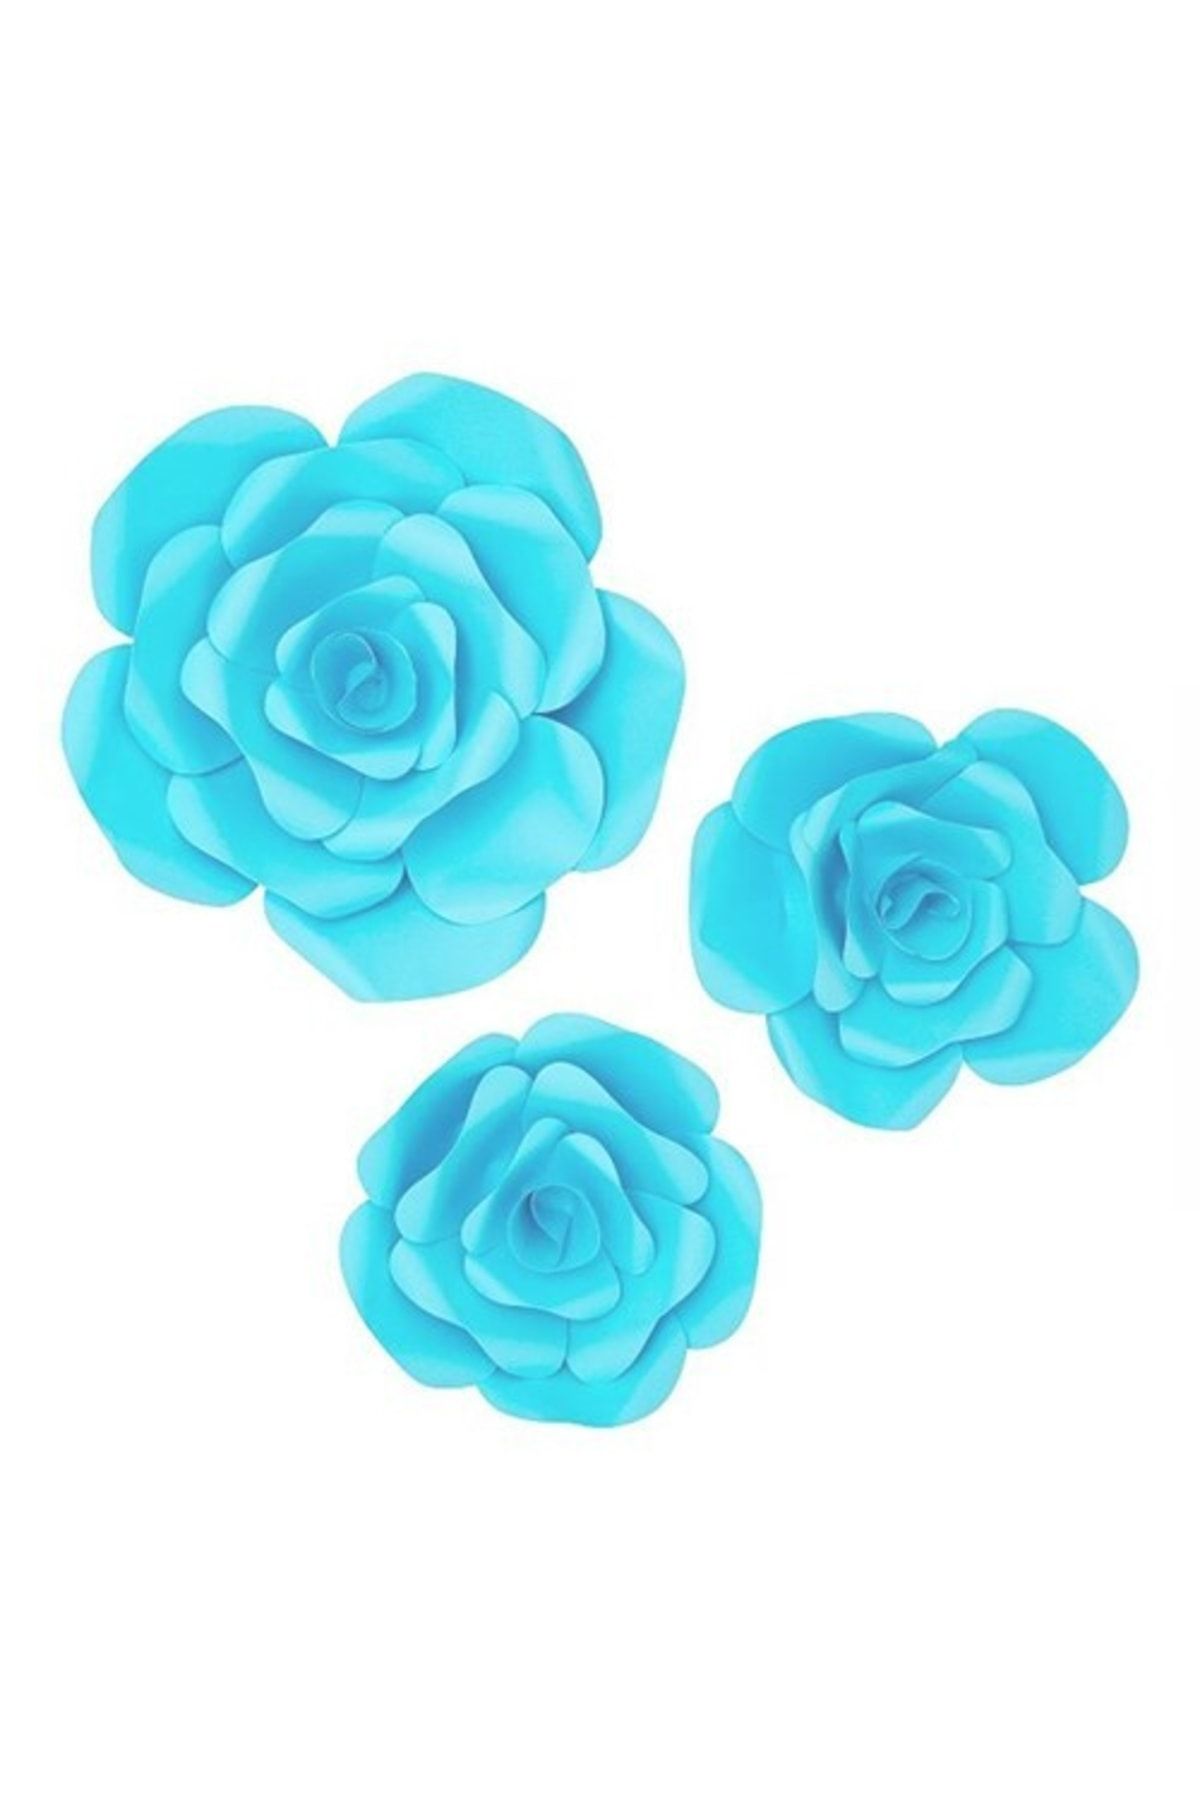 Partioutlet Mavi Renkli 3 Boyutlu Dekoratif Kağıt Çiçek 20 Cm 2 Adet